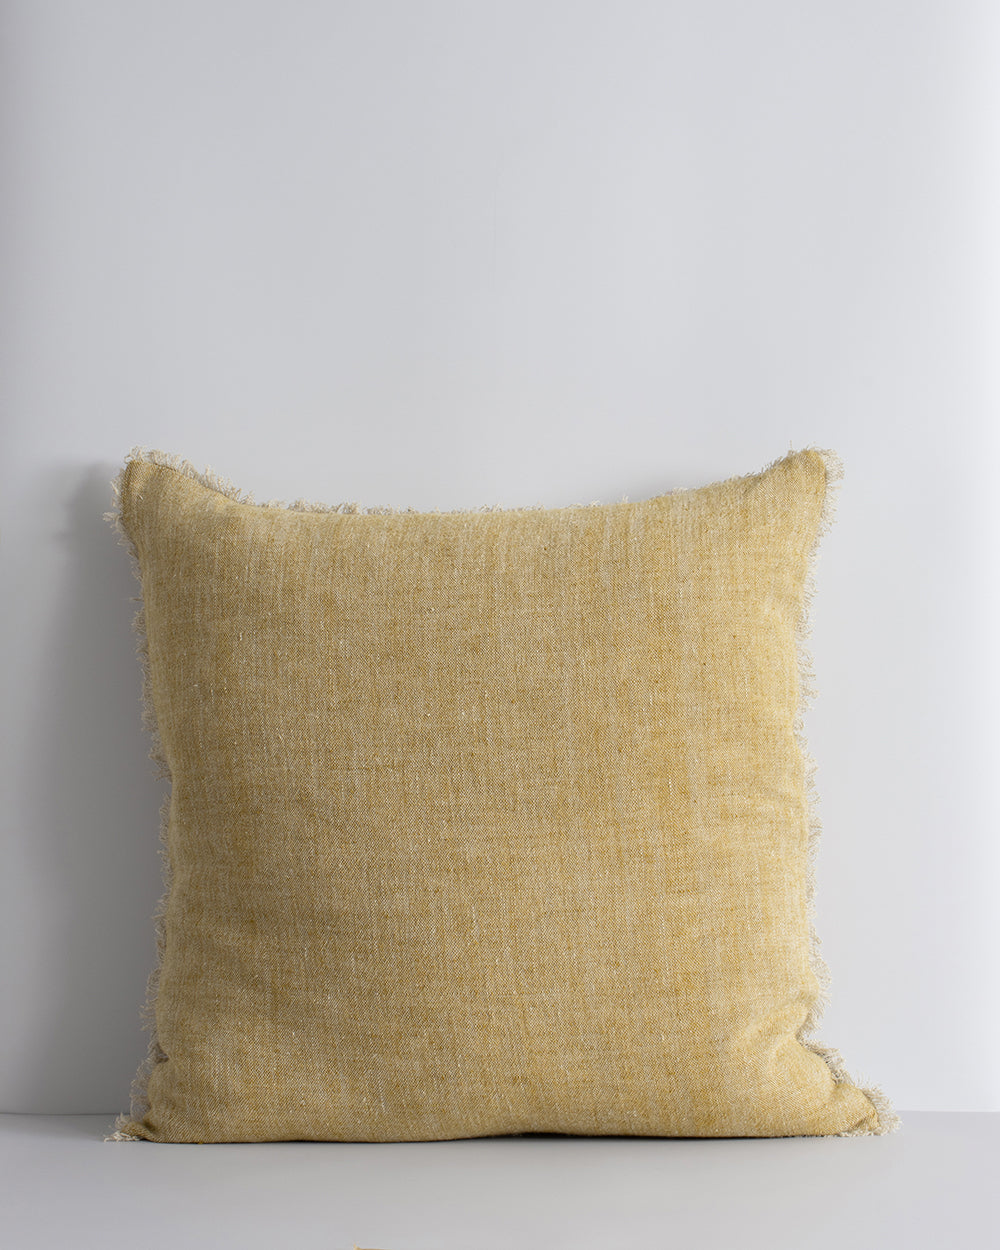 Keaton Linen cushion in wheat